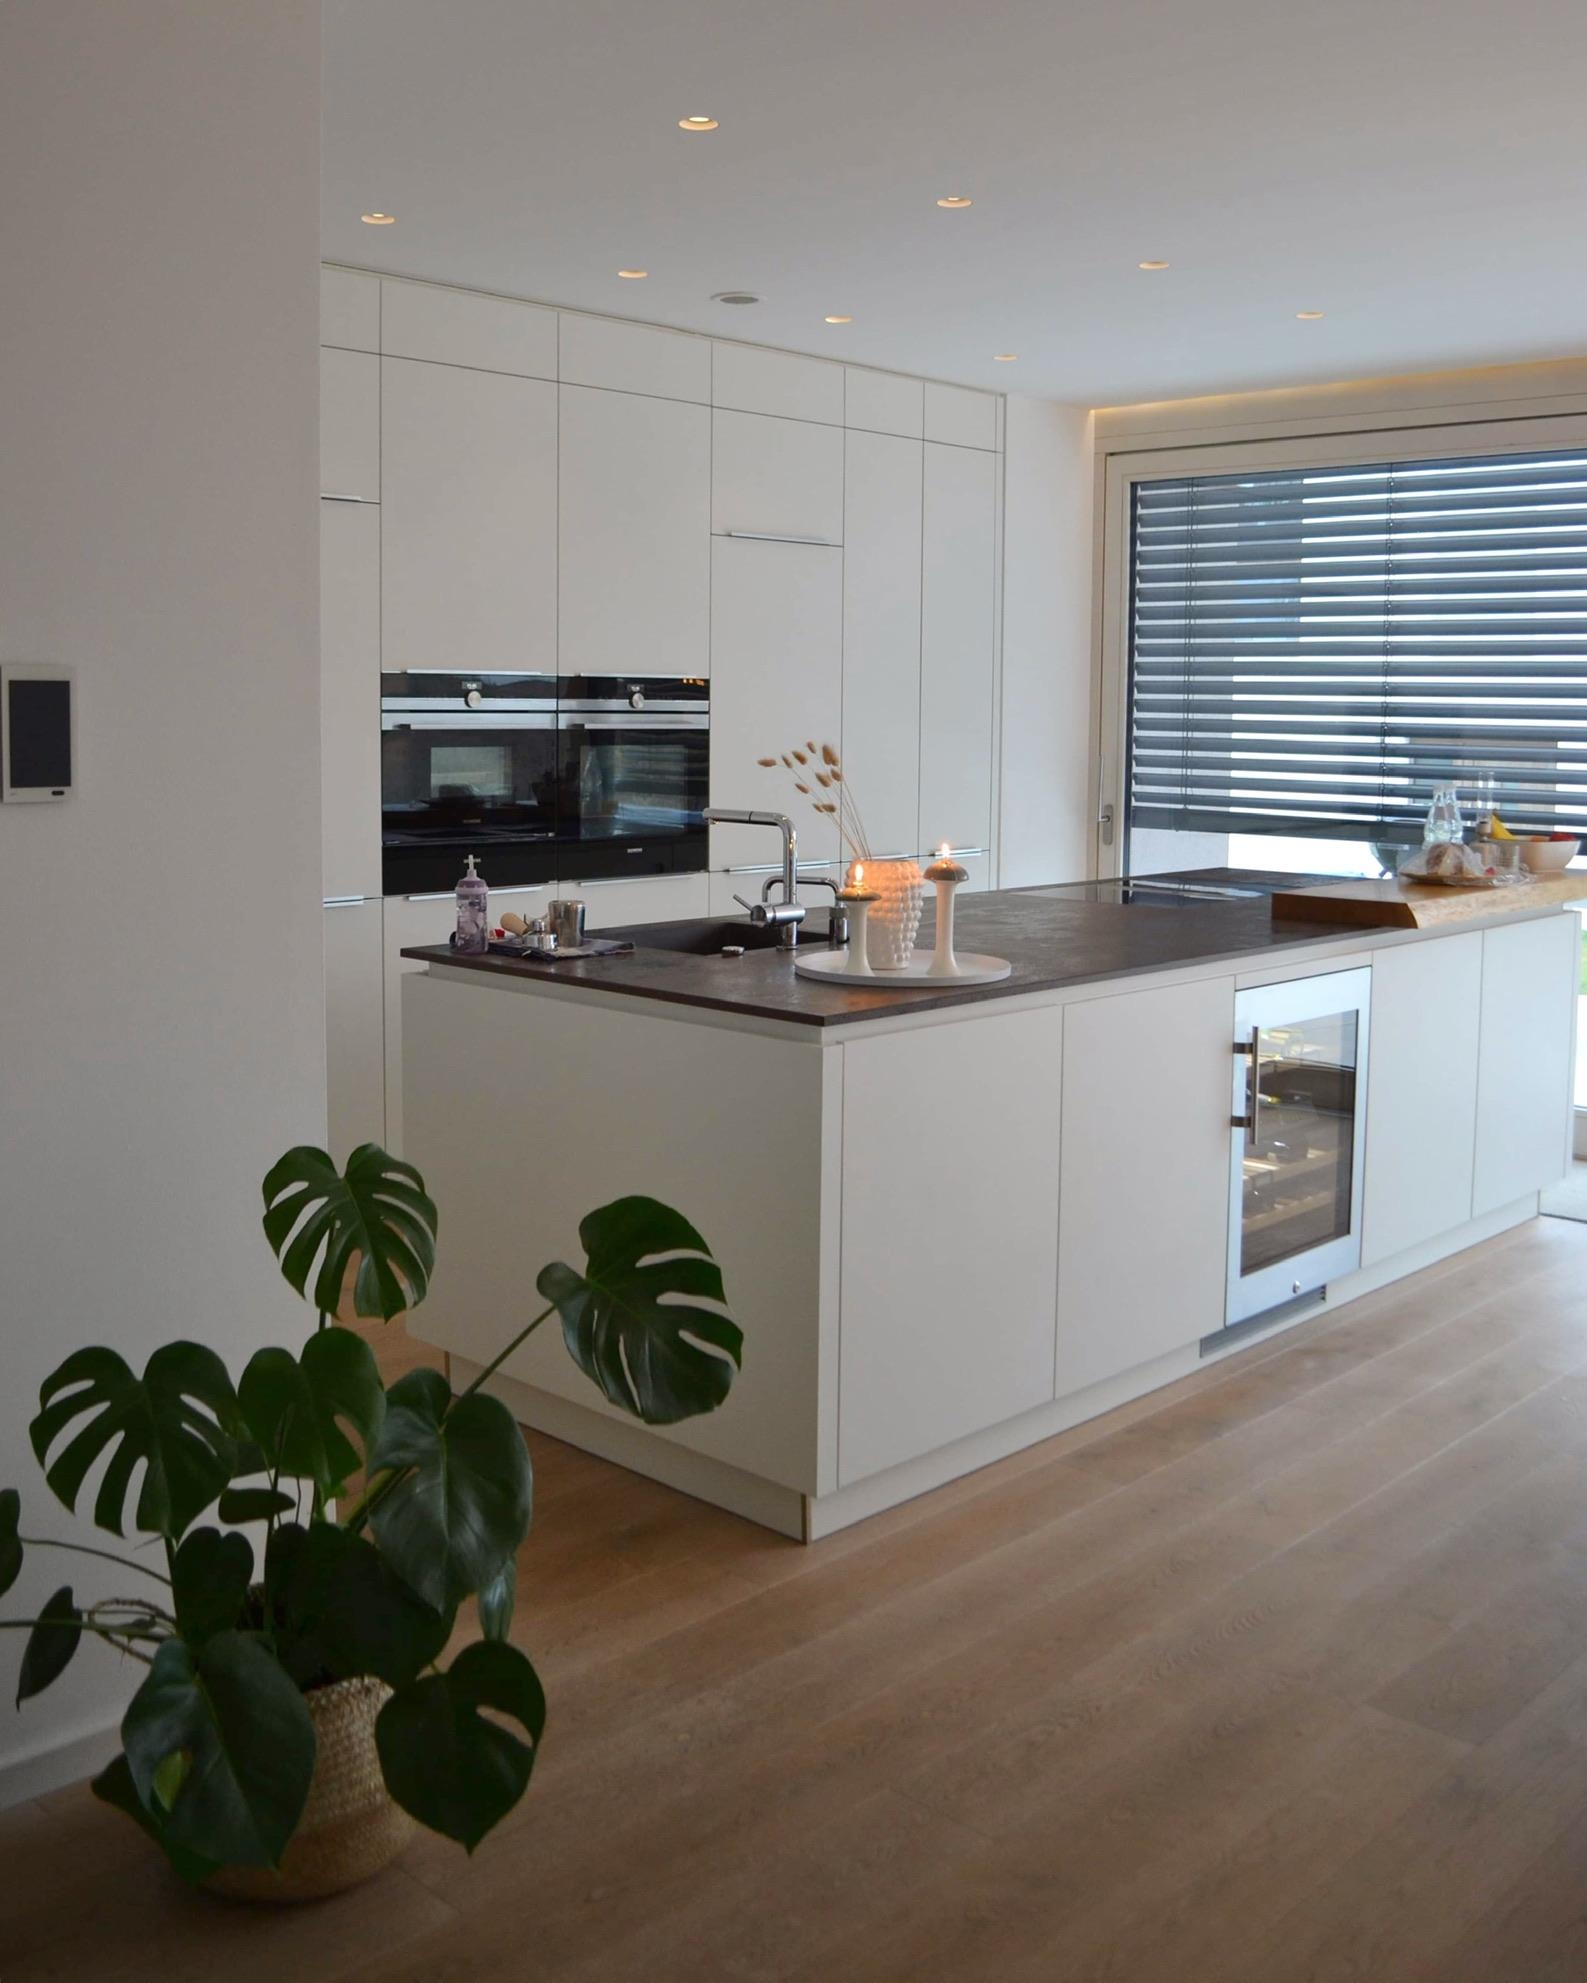 Unsere Küche...
#nordicminemalism #cleanliving #küche #kitchen 